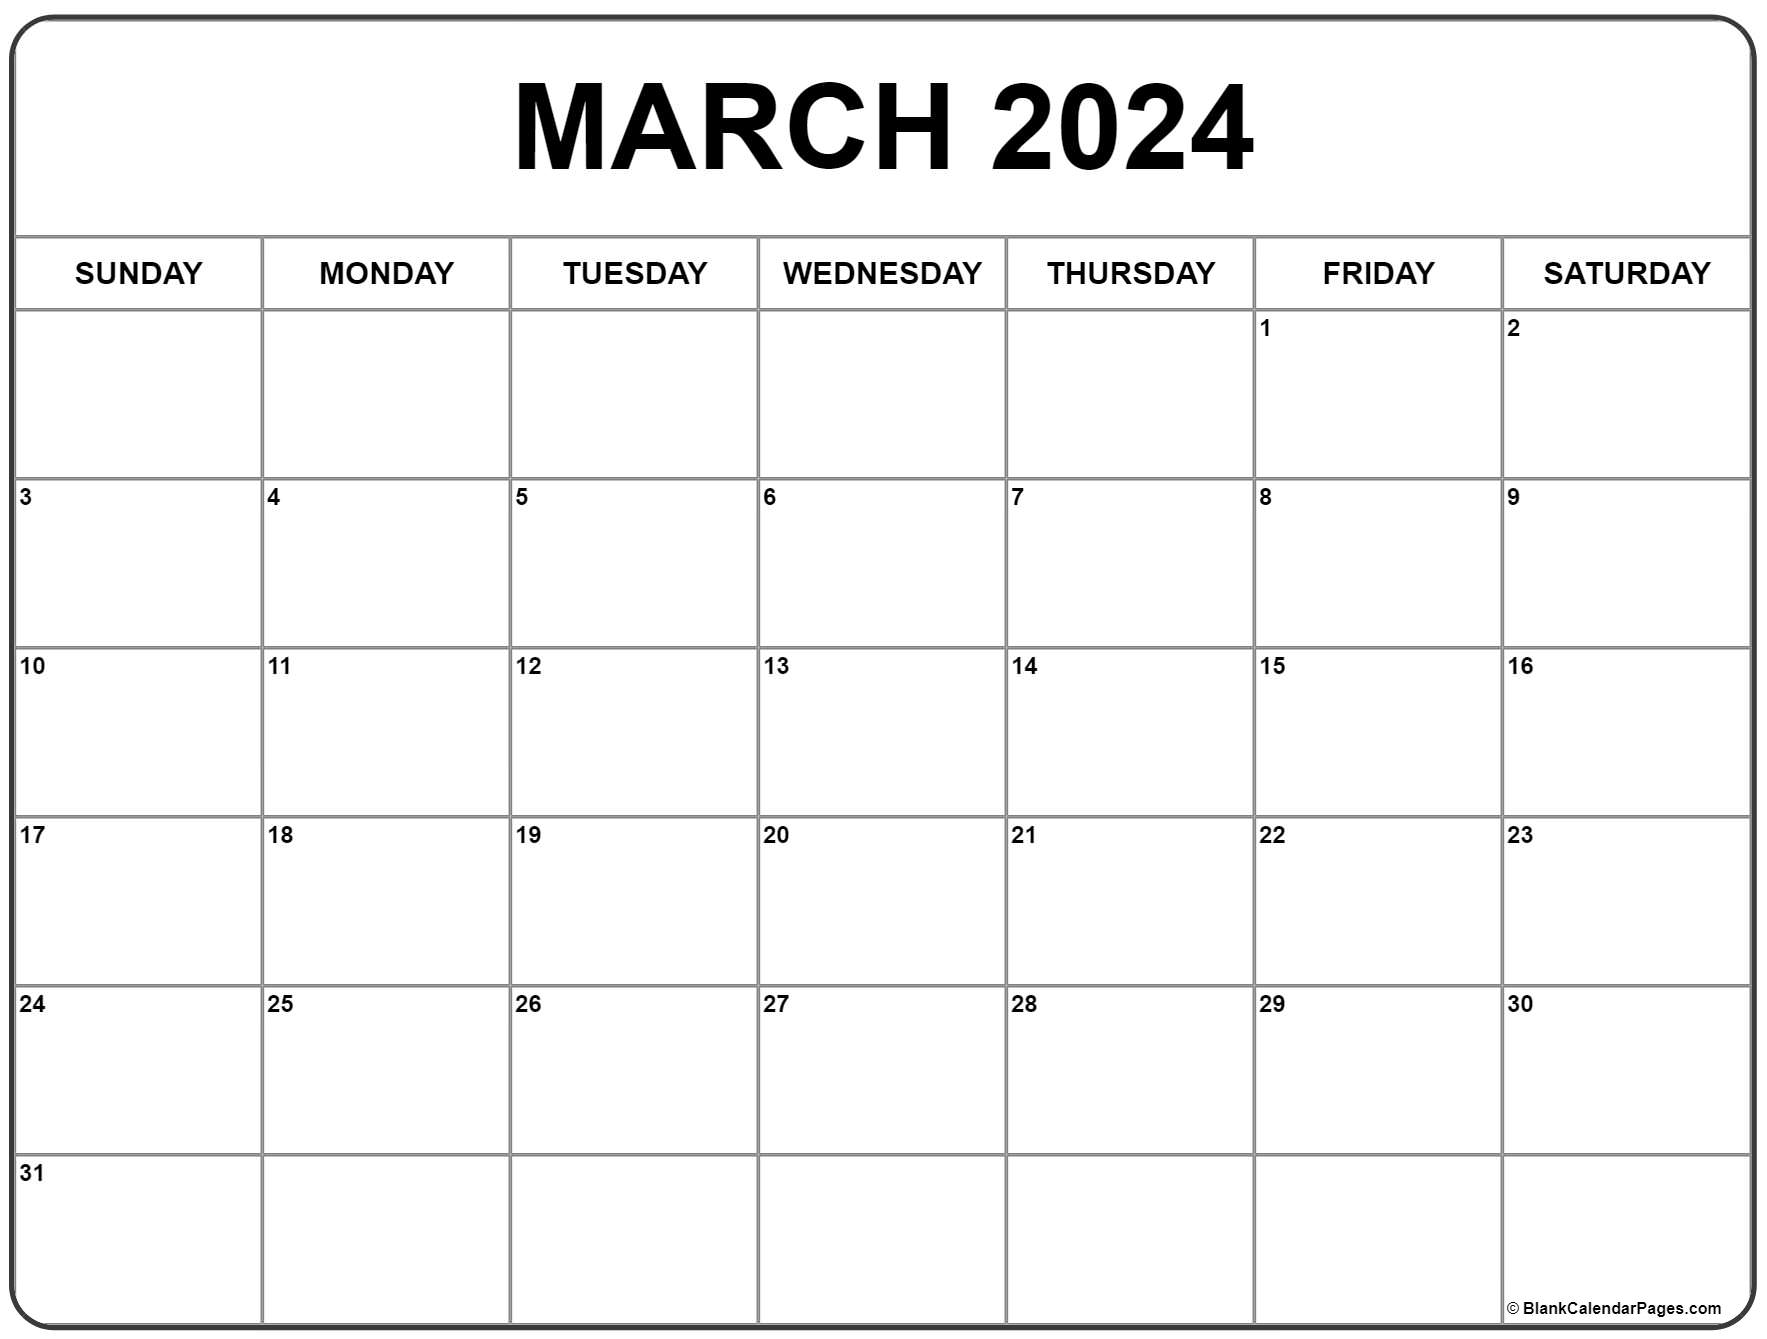 March 2024 Calendar | Free Printable Calendar for Free Printable March Calendar 2024